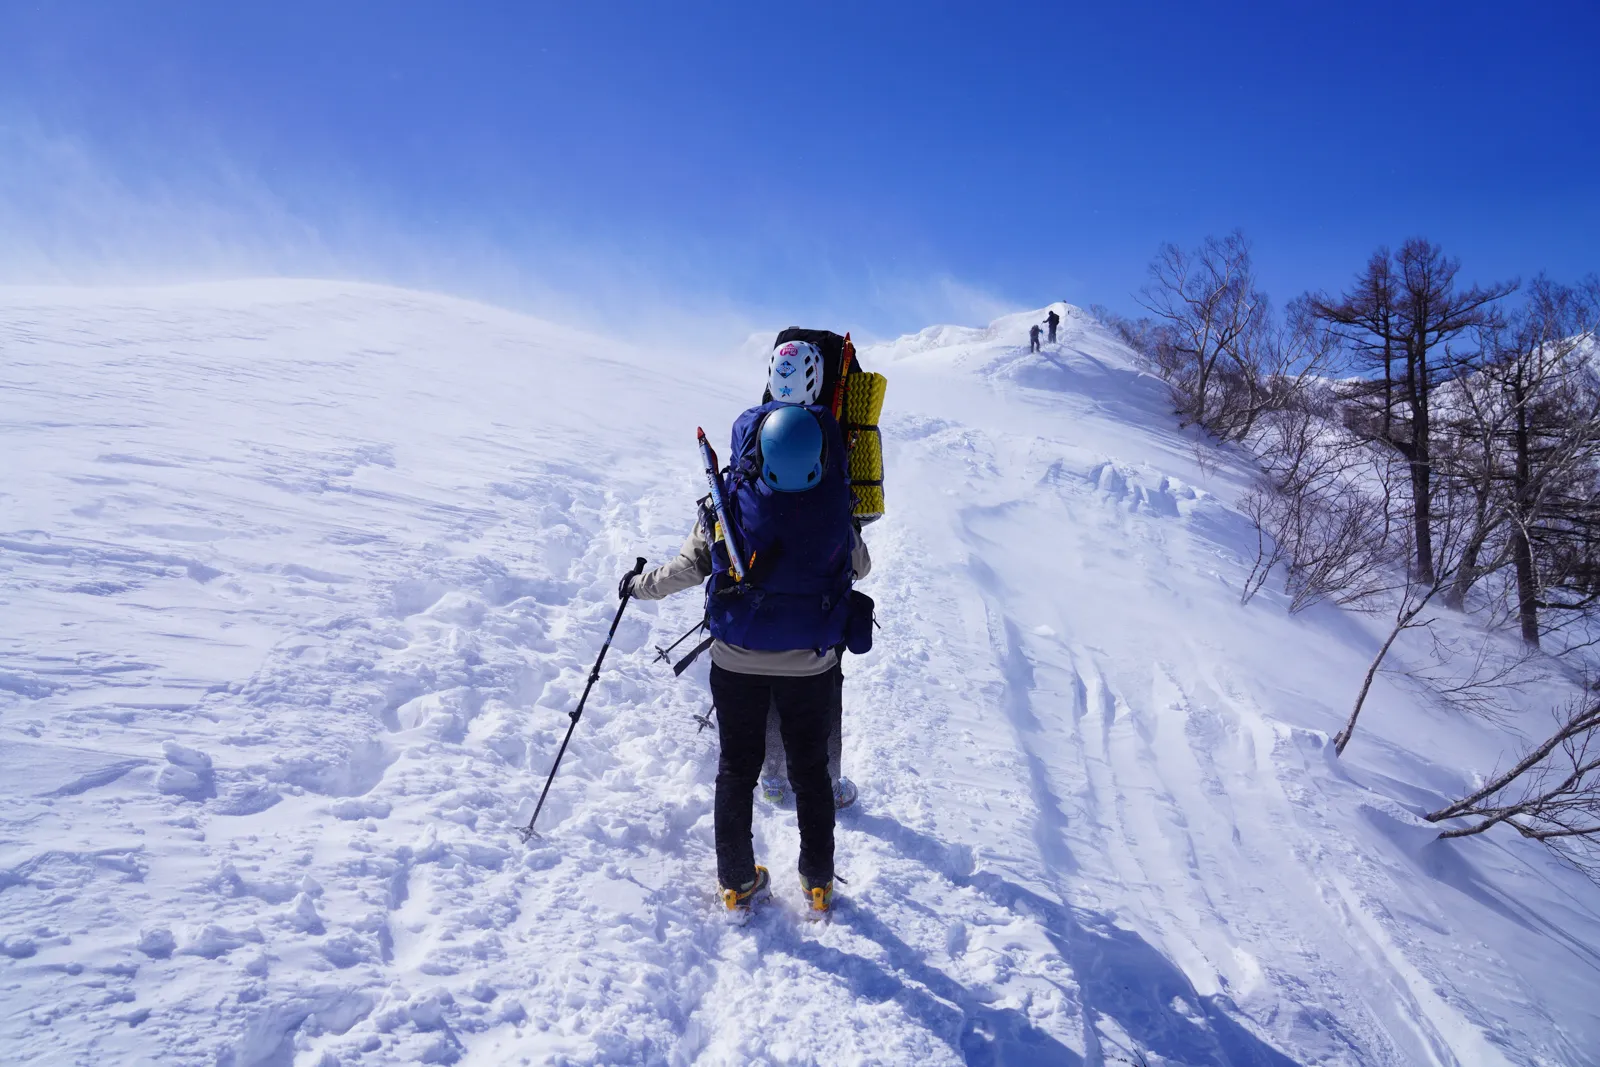 五竜岳 遠見尾根 冬季雪上テント泊